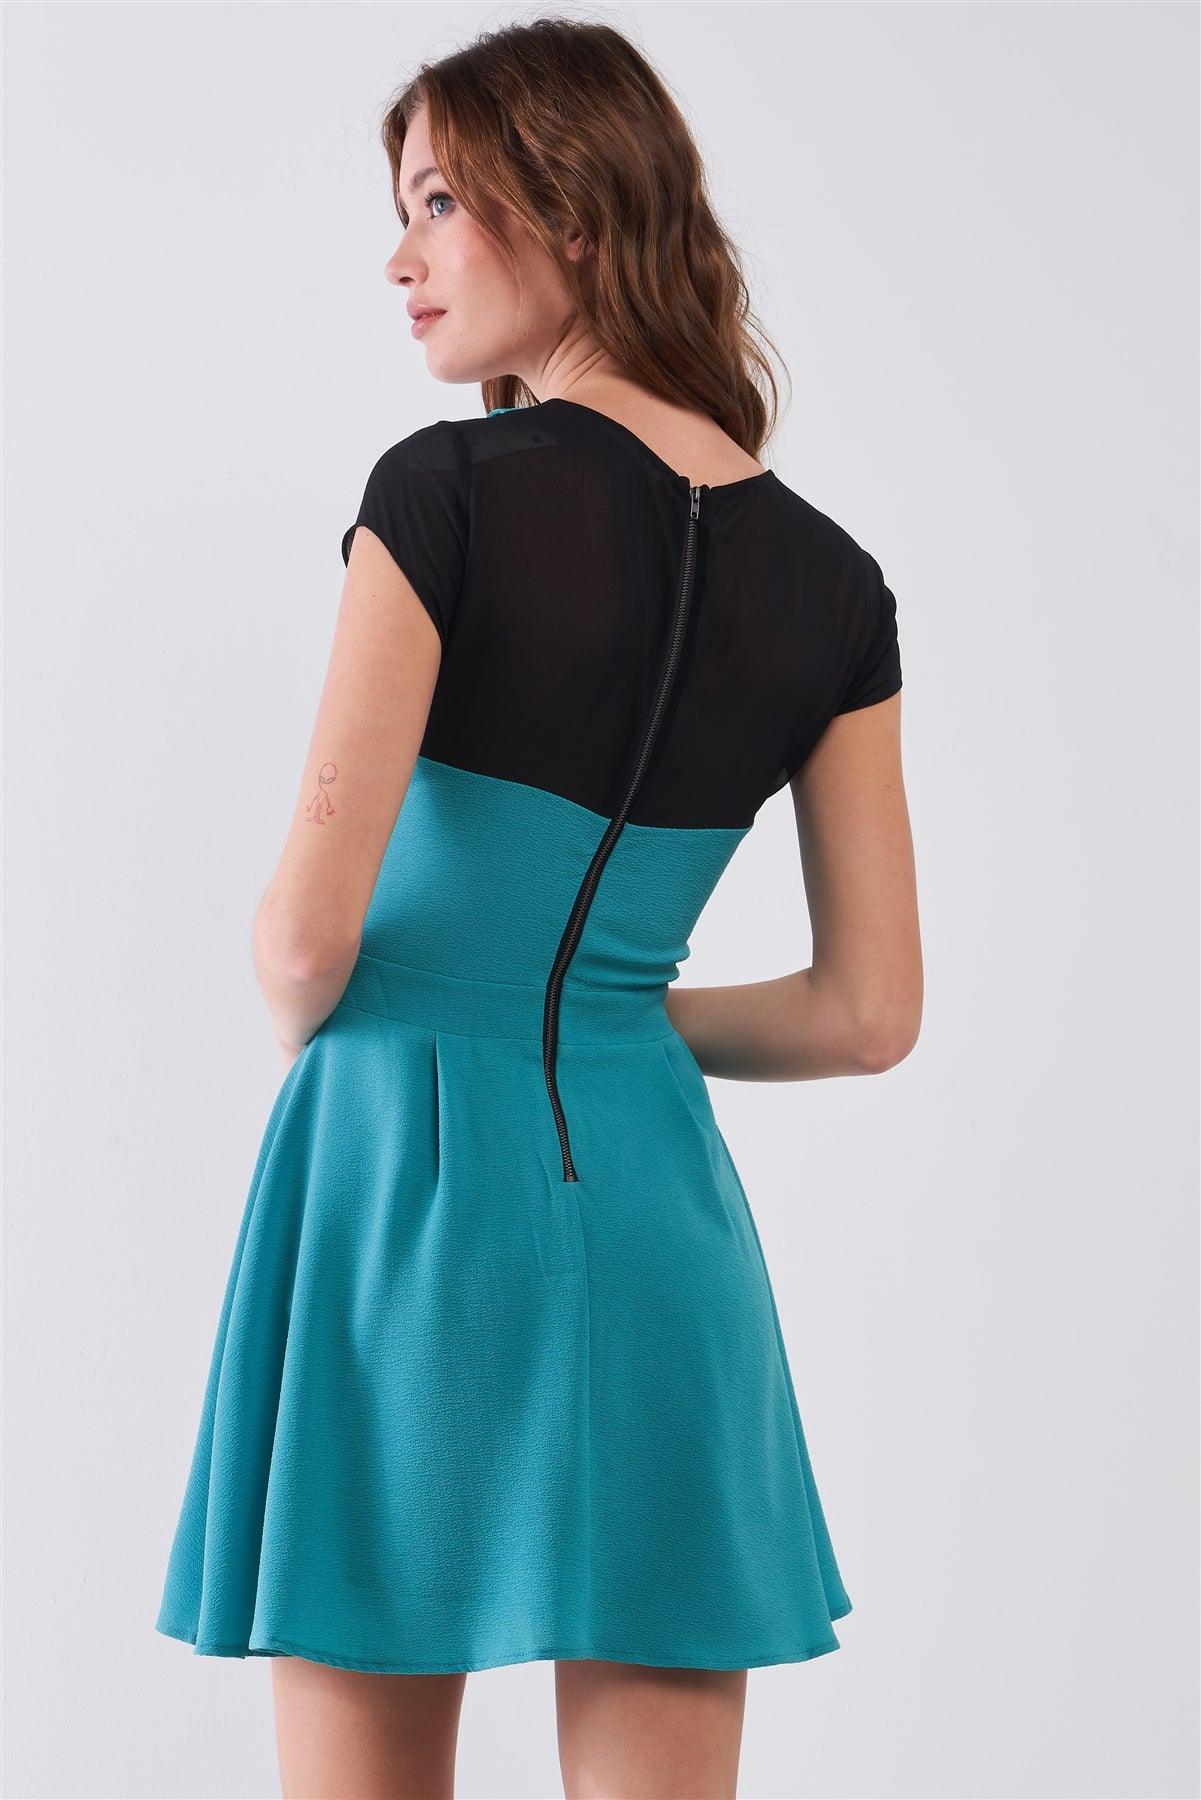 Teal & Black Color Block Sheer Collared Neck Short Sleeve A-Line Mini Dress /1-2-2-1